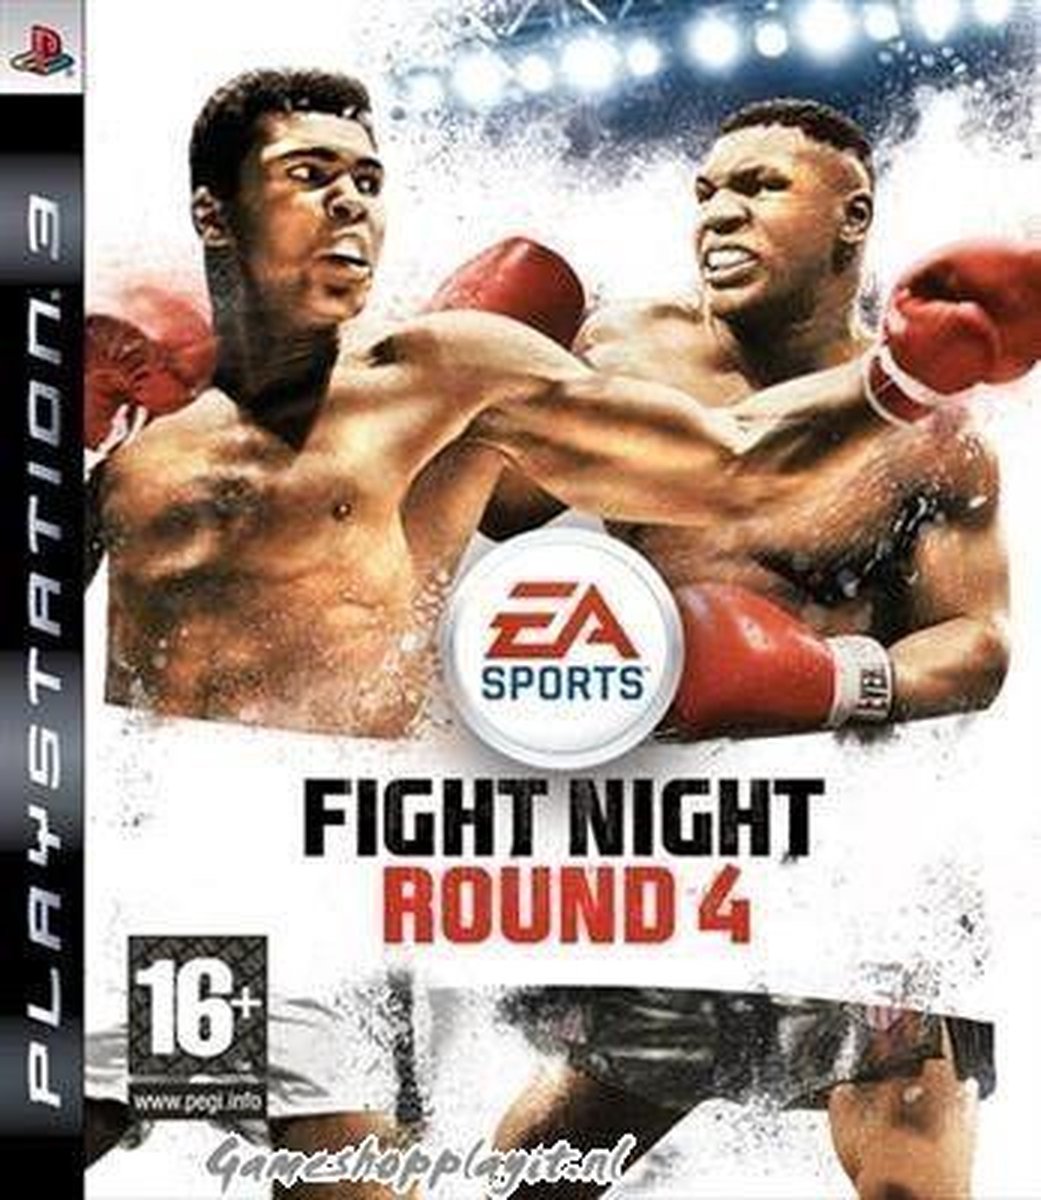 Fight night round 4 (import)